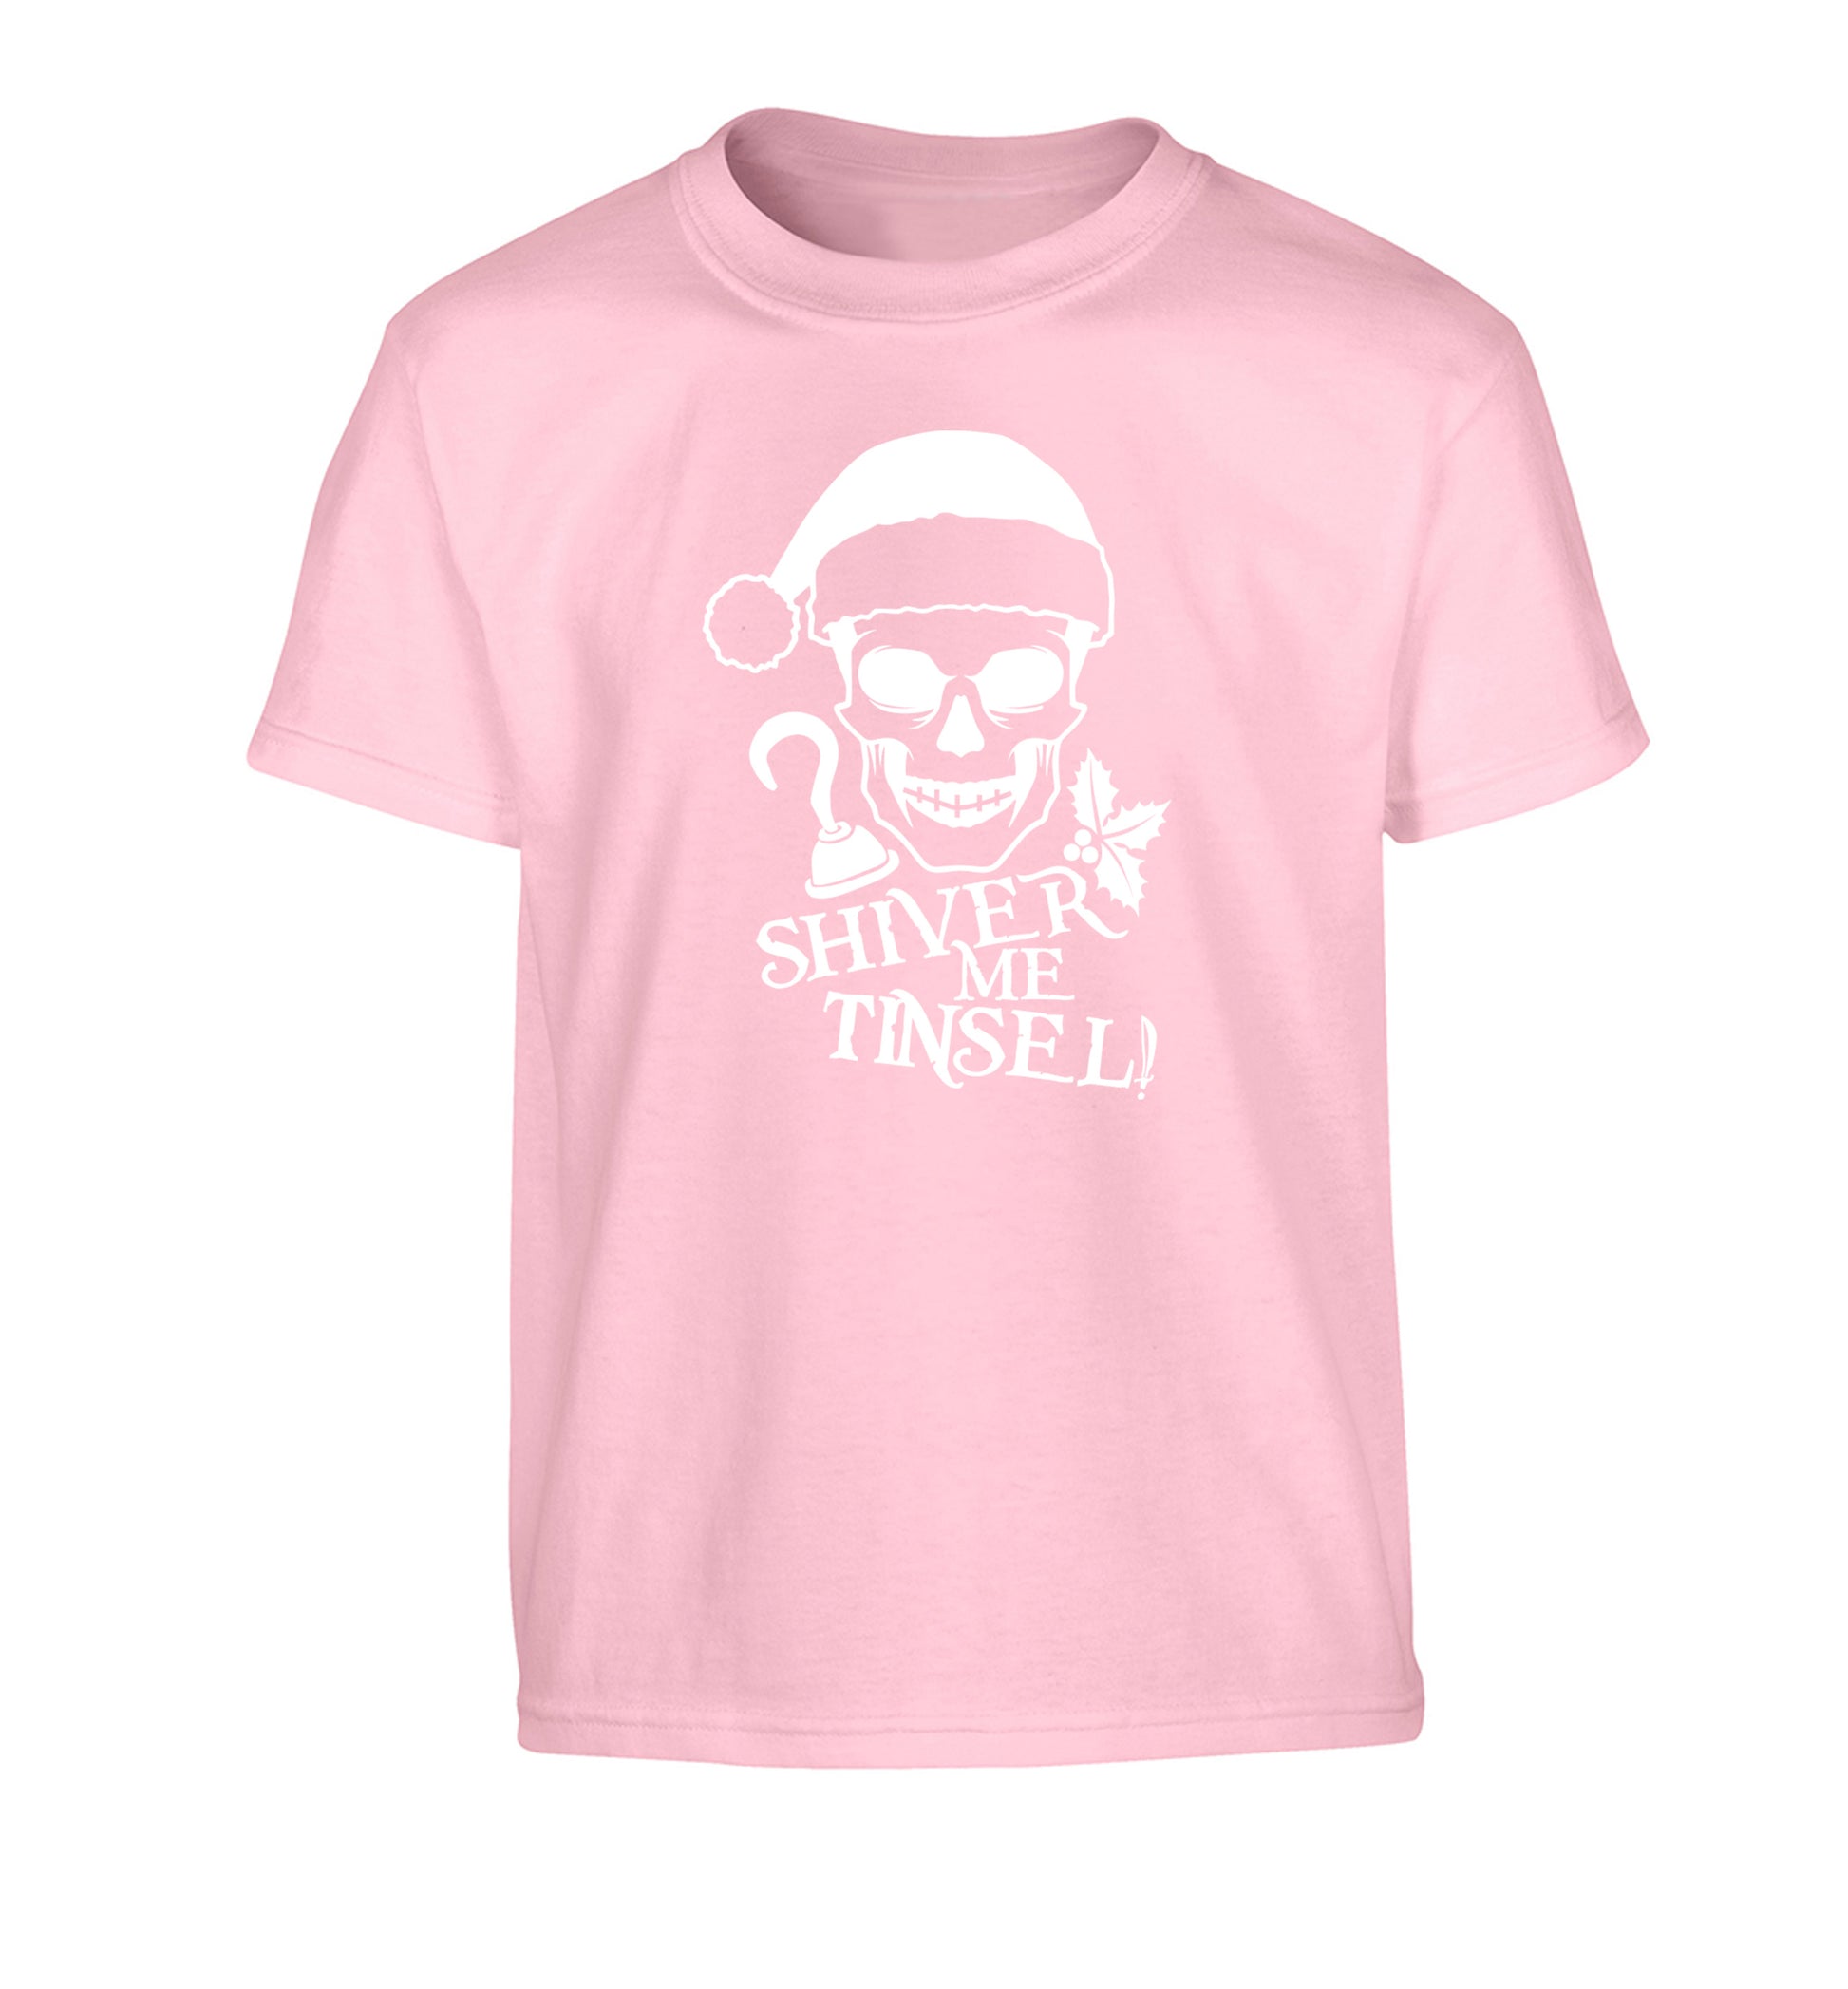 Shiver me tinsel Children's light pink Tshirt 12-14 Years